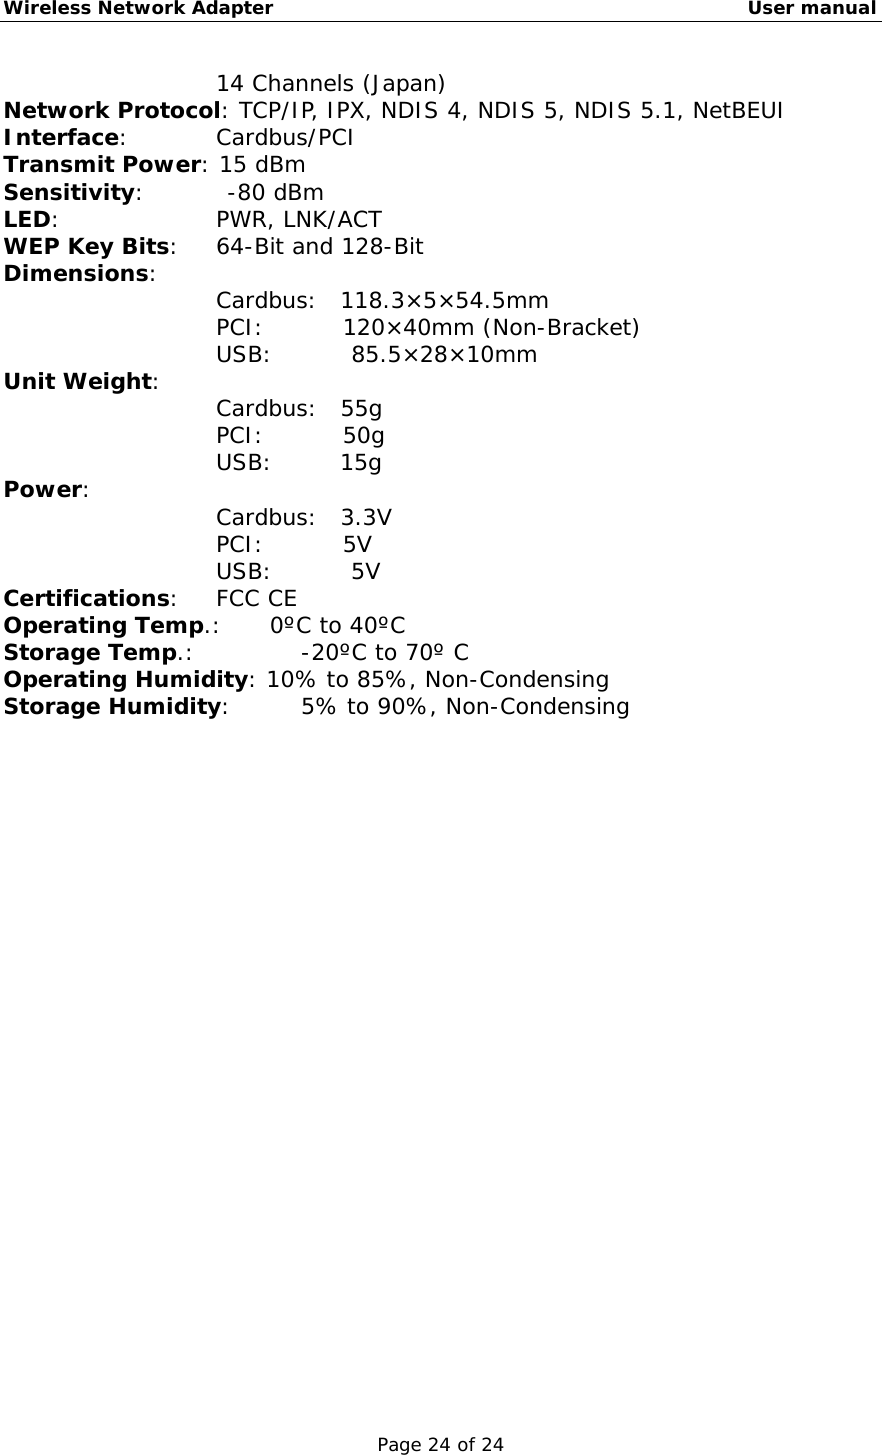 Wireless Network Adapter                                                    User manual Page 24 of 24 14 Channels (Japan) Network Protocol: TCP/IP, IPX, NDIS 4, NDIS 5, NDIS 5.1, NetBEUI Interface:      Cardbus/PCI Transmit Power: 15 dBm Sensitivity:    -80 dBm LED:     PWR, LNK/ACT WEP Key Bits:   64-Bit and 128-Bit Dimensions:    Cardbus:  118.3×5×54.5mm PCI:       120×40mm (Non-Bracket) USB:       85.5×28×10mm Unit Weight:     Cardbus:  55g PCI:       50g USB:      15g Power:          Cardbus:  3.3V PCI:       5V USB:       5V Certifications:   FCC CE Operating Temp.:   0ºC to 40ºC Storage Temp.:    -20ºC to 70º C Operating Humidity: 10% to 85%, Non-Condensing Storage Humidity:     5% to 90%, Non-Condensing 